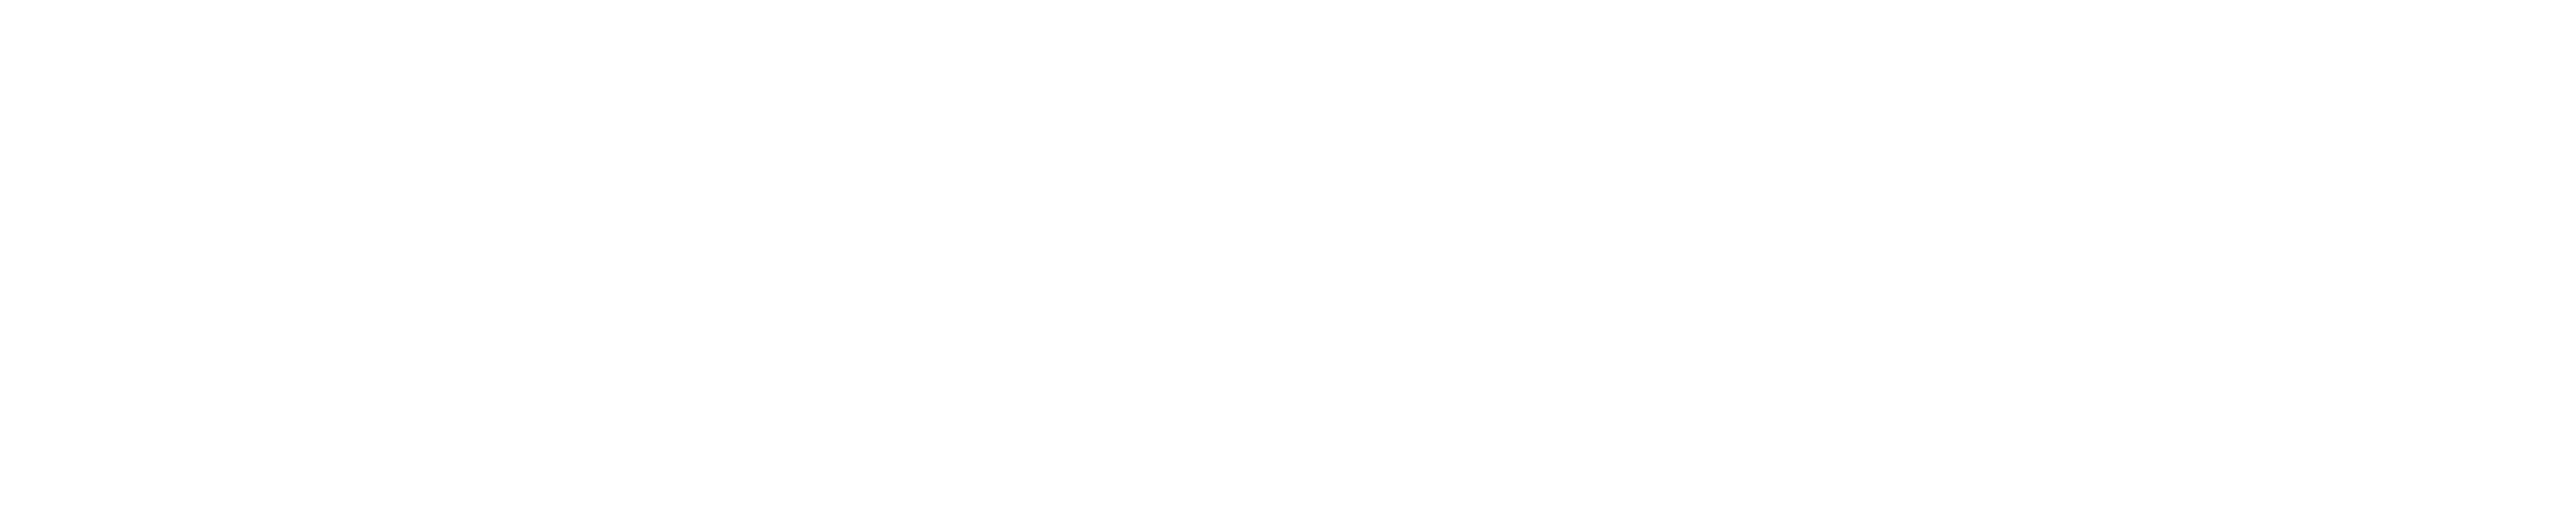 Playstation 4 logo, ps4 logo.